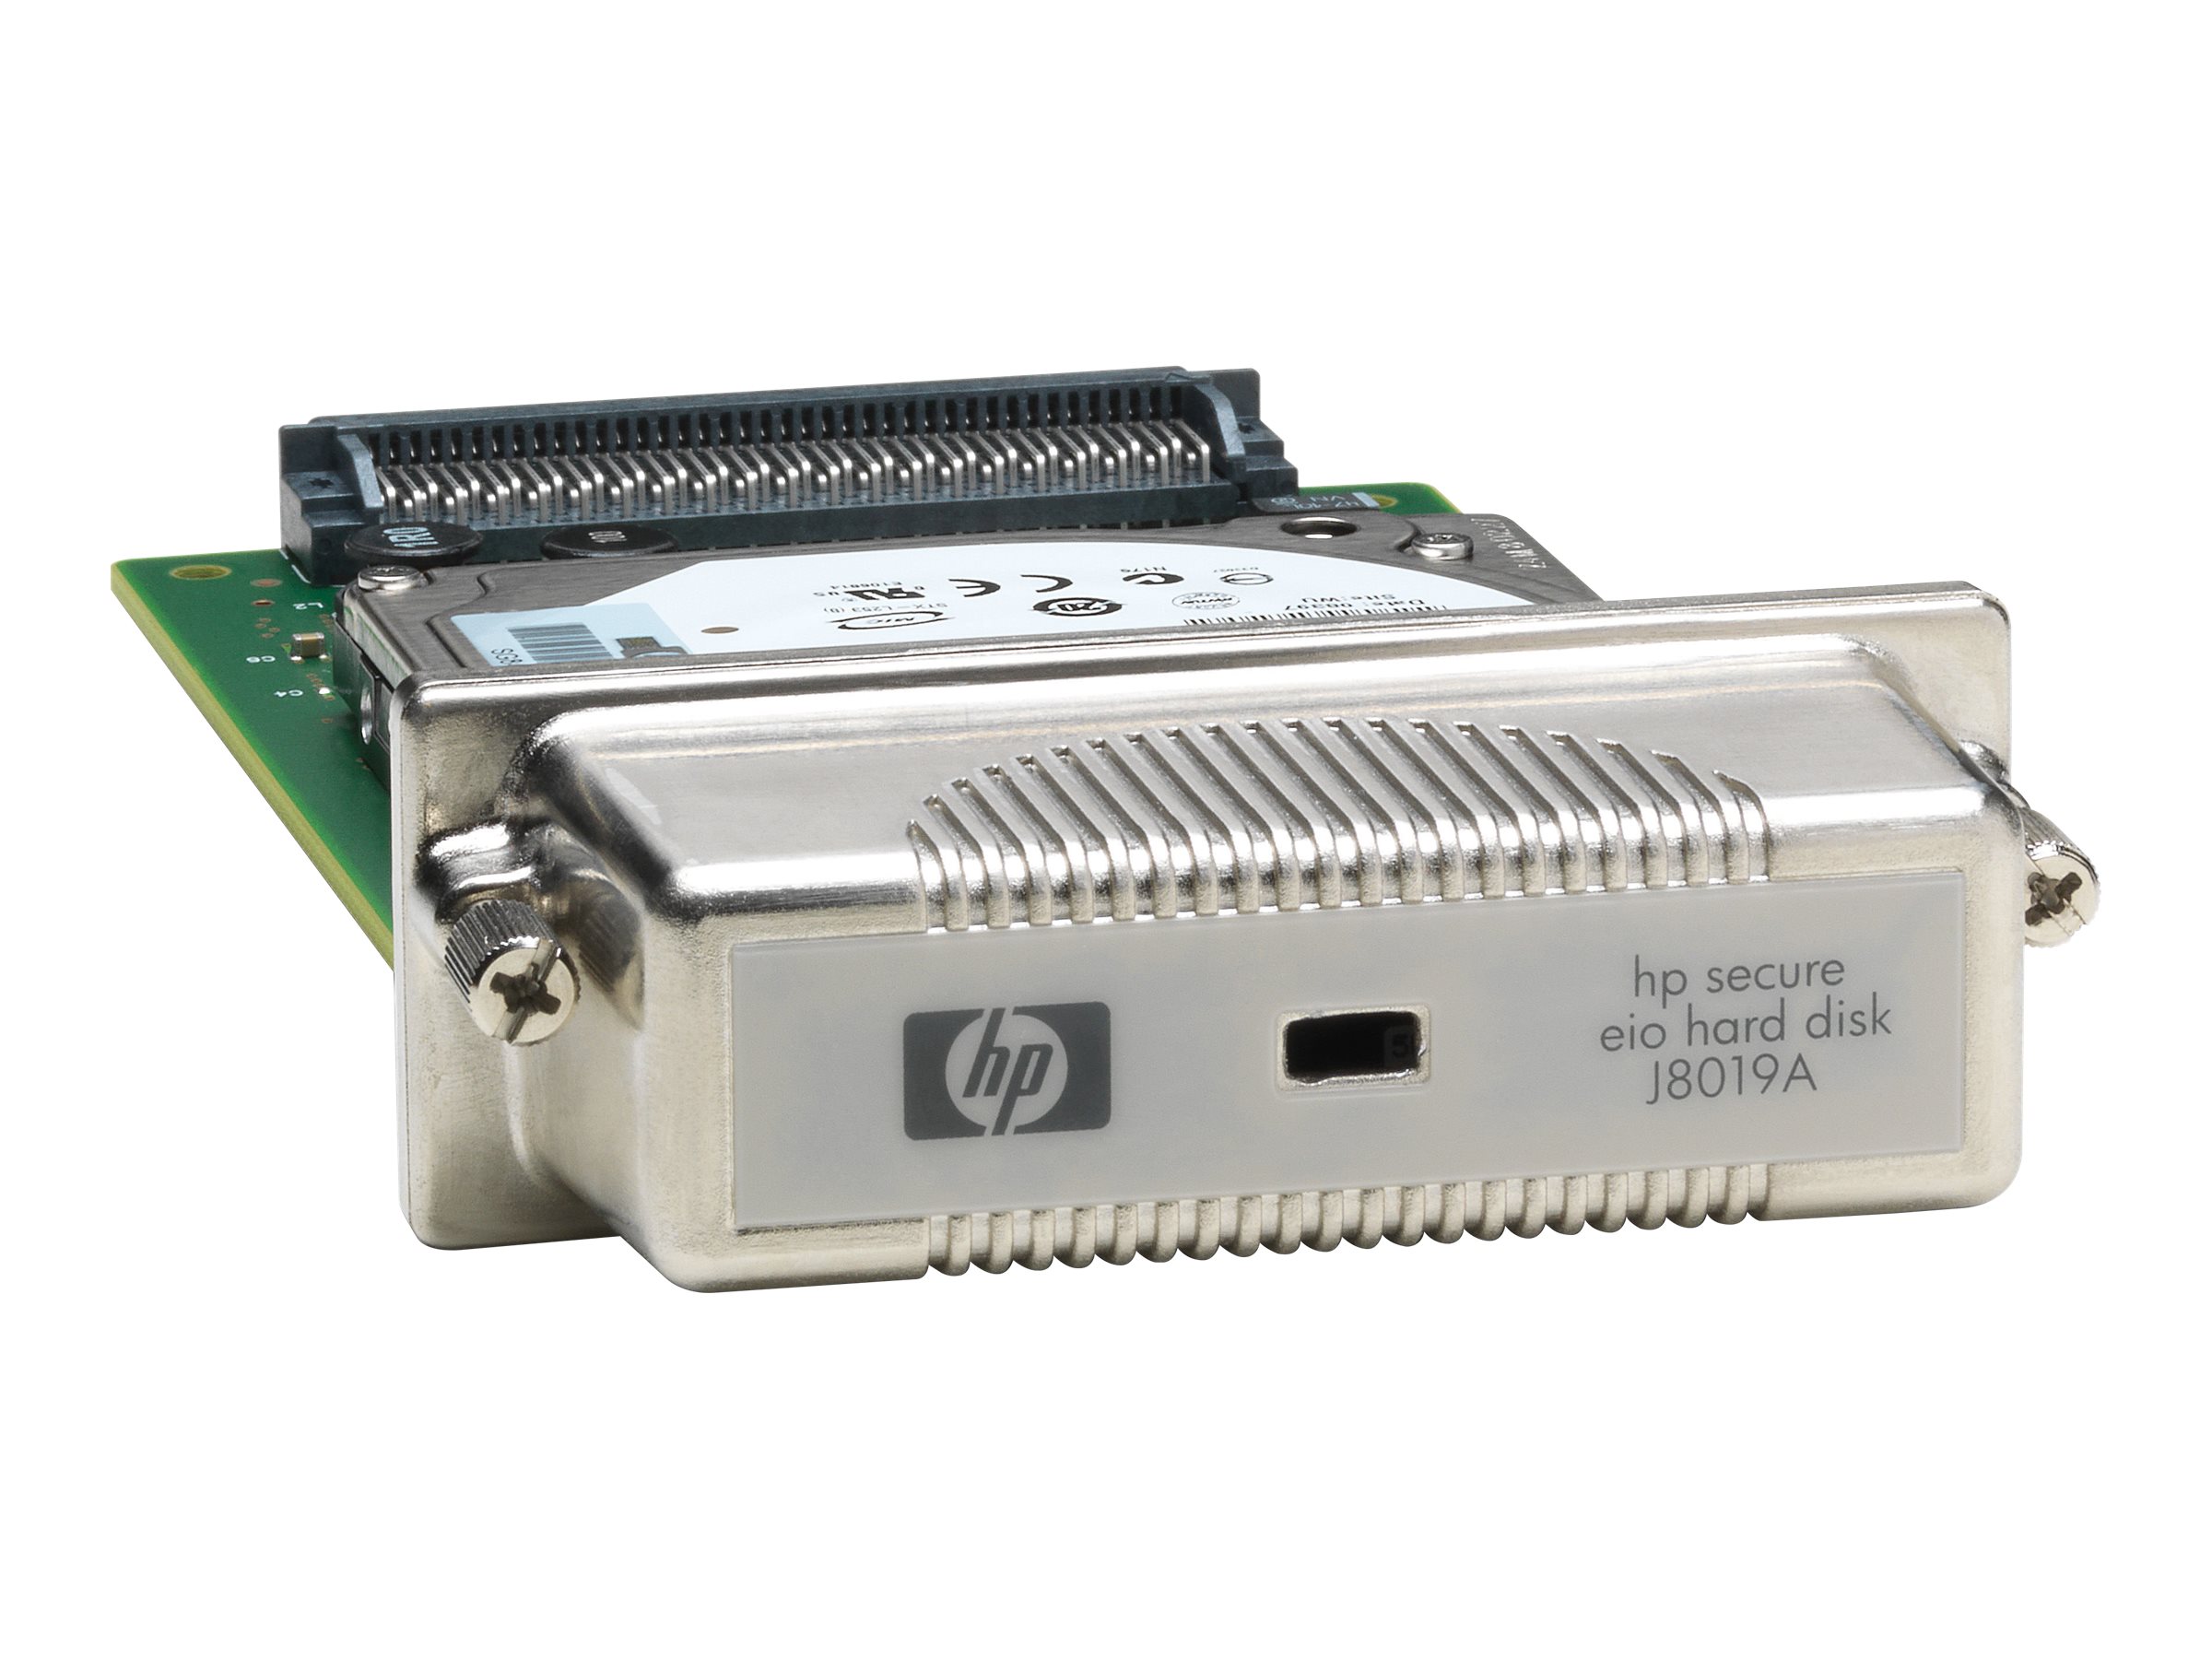 HP High Performance Secure EIO Hard Disk (J8019A)